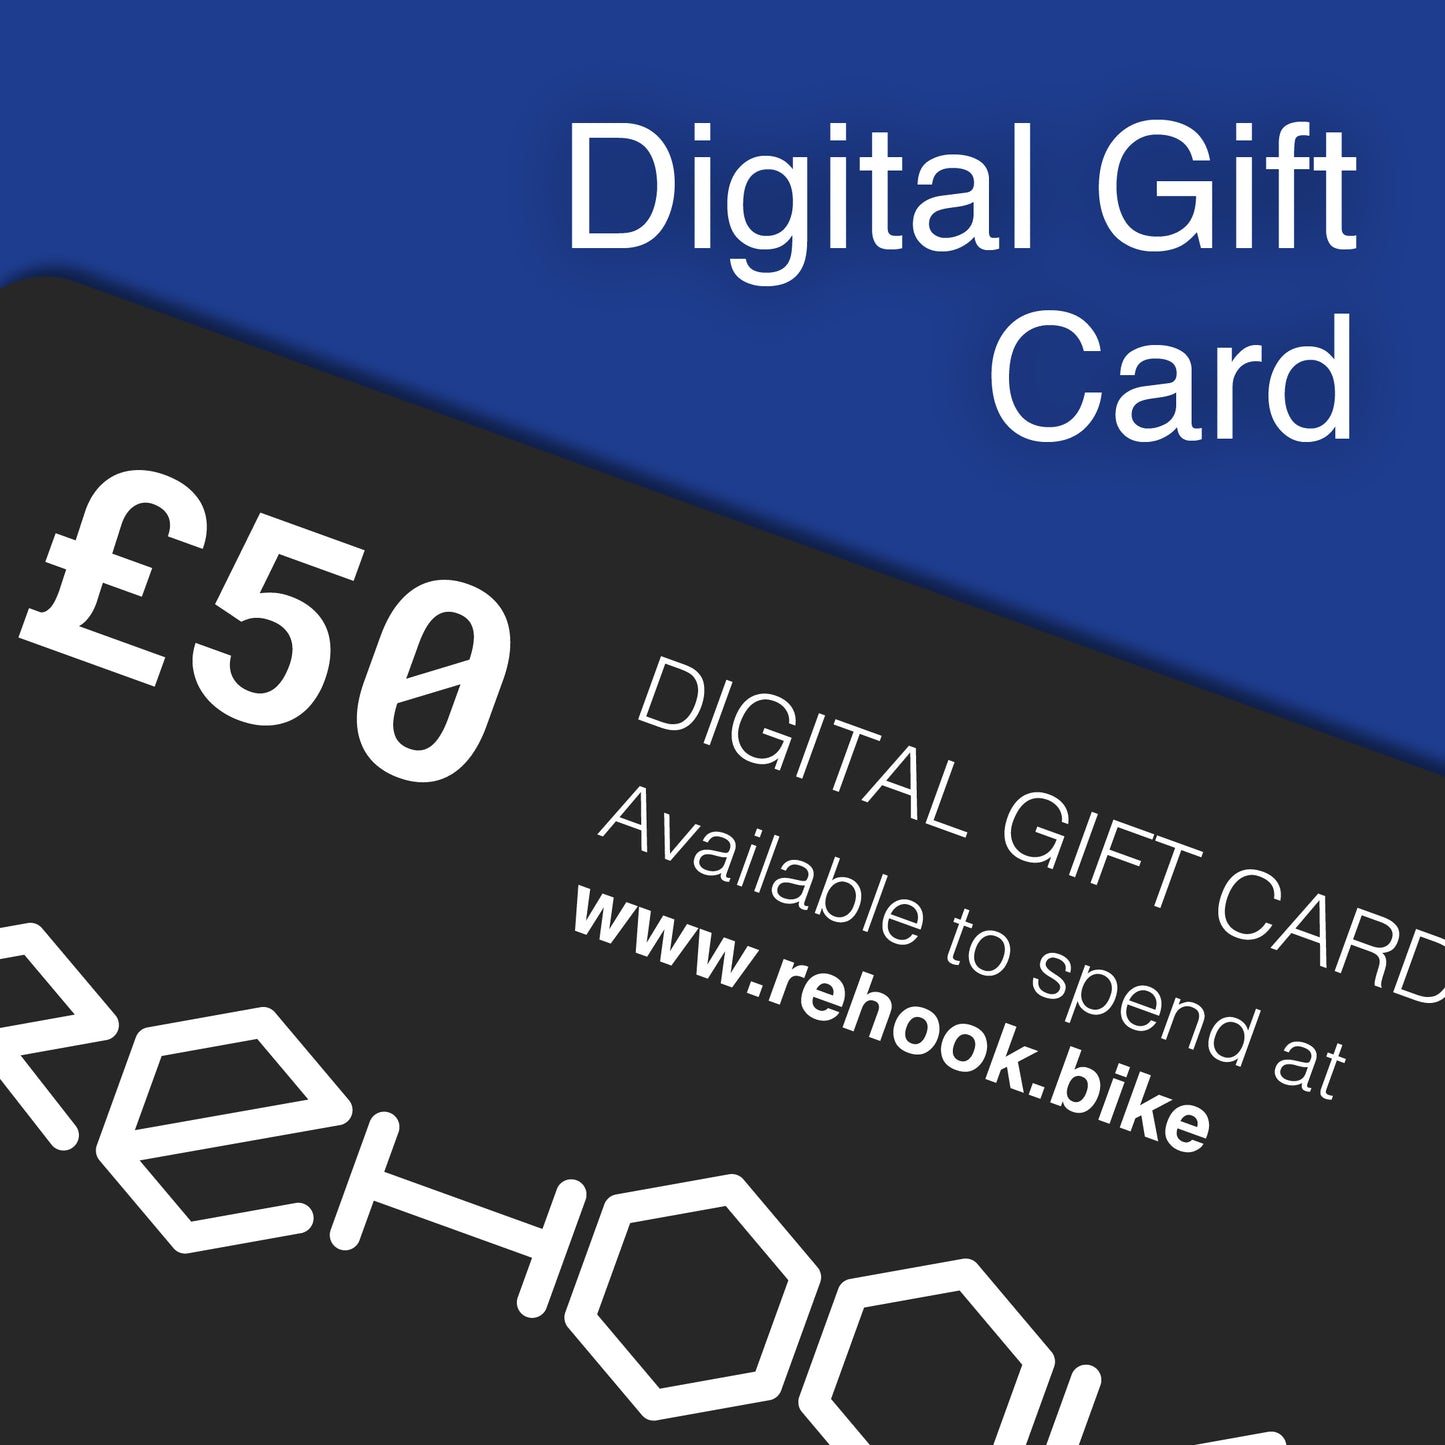 Rehook Digital Gift Card